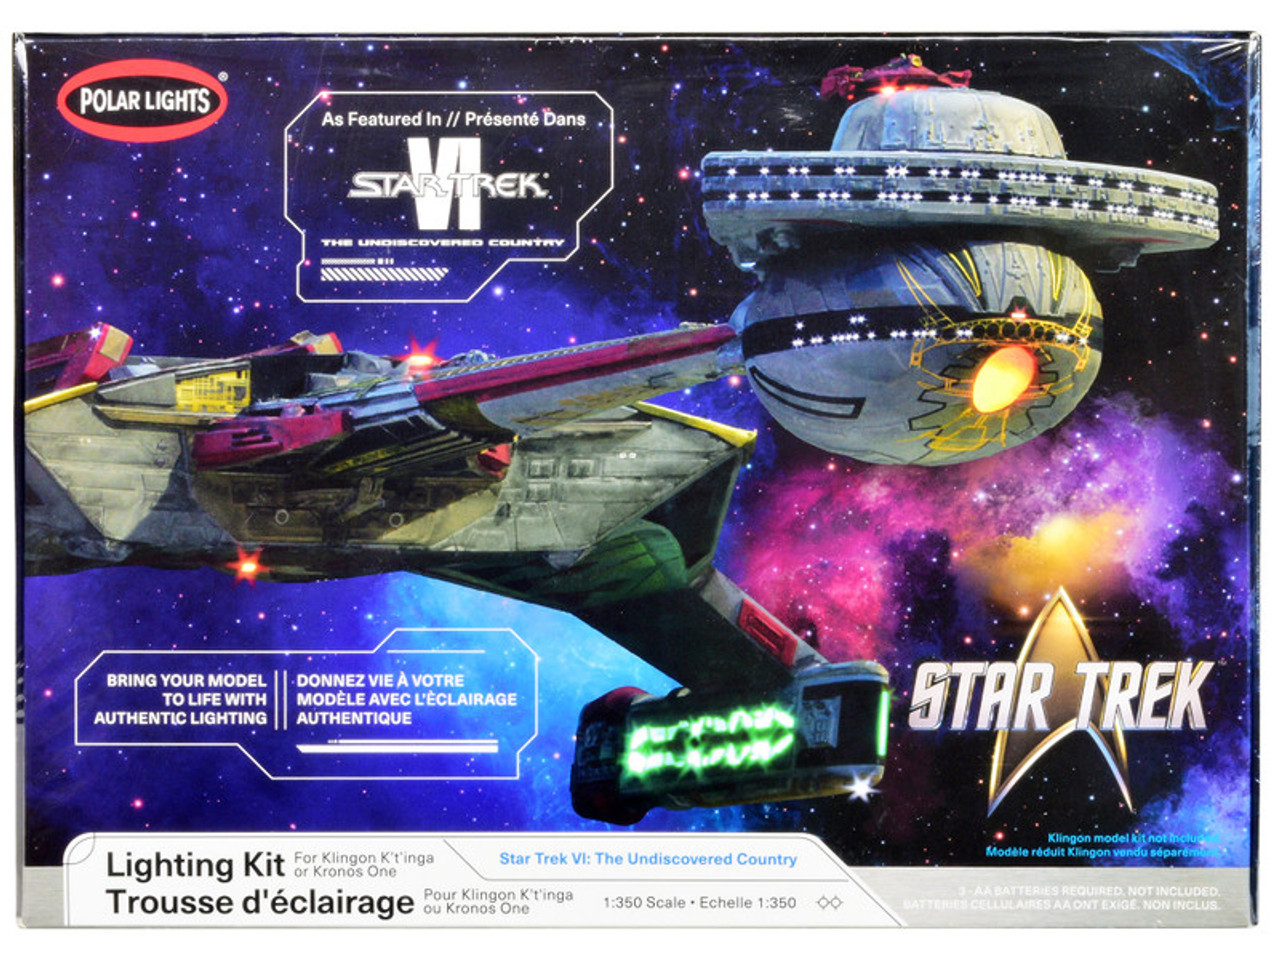 Skill 2 Model Kit Lighting Kit for Klingon Kronos One Spaceship "Star Trek VI: The Undiscovered Country" (1991) Movie 1/350 Scale Model by Polar Lights